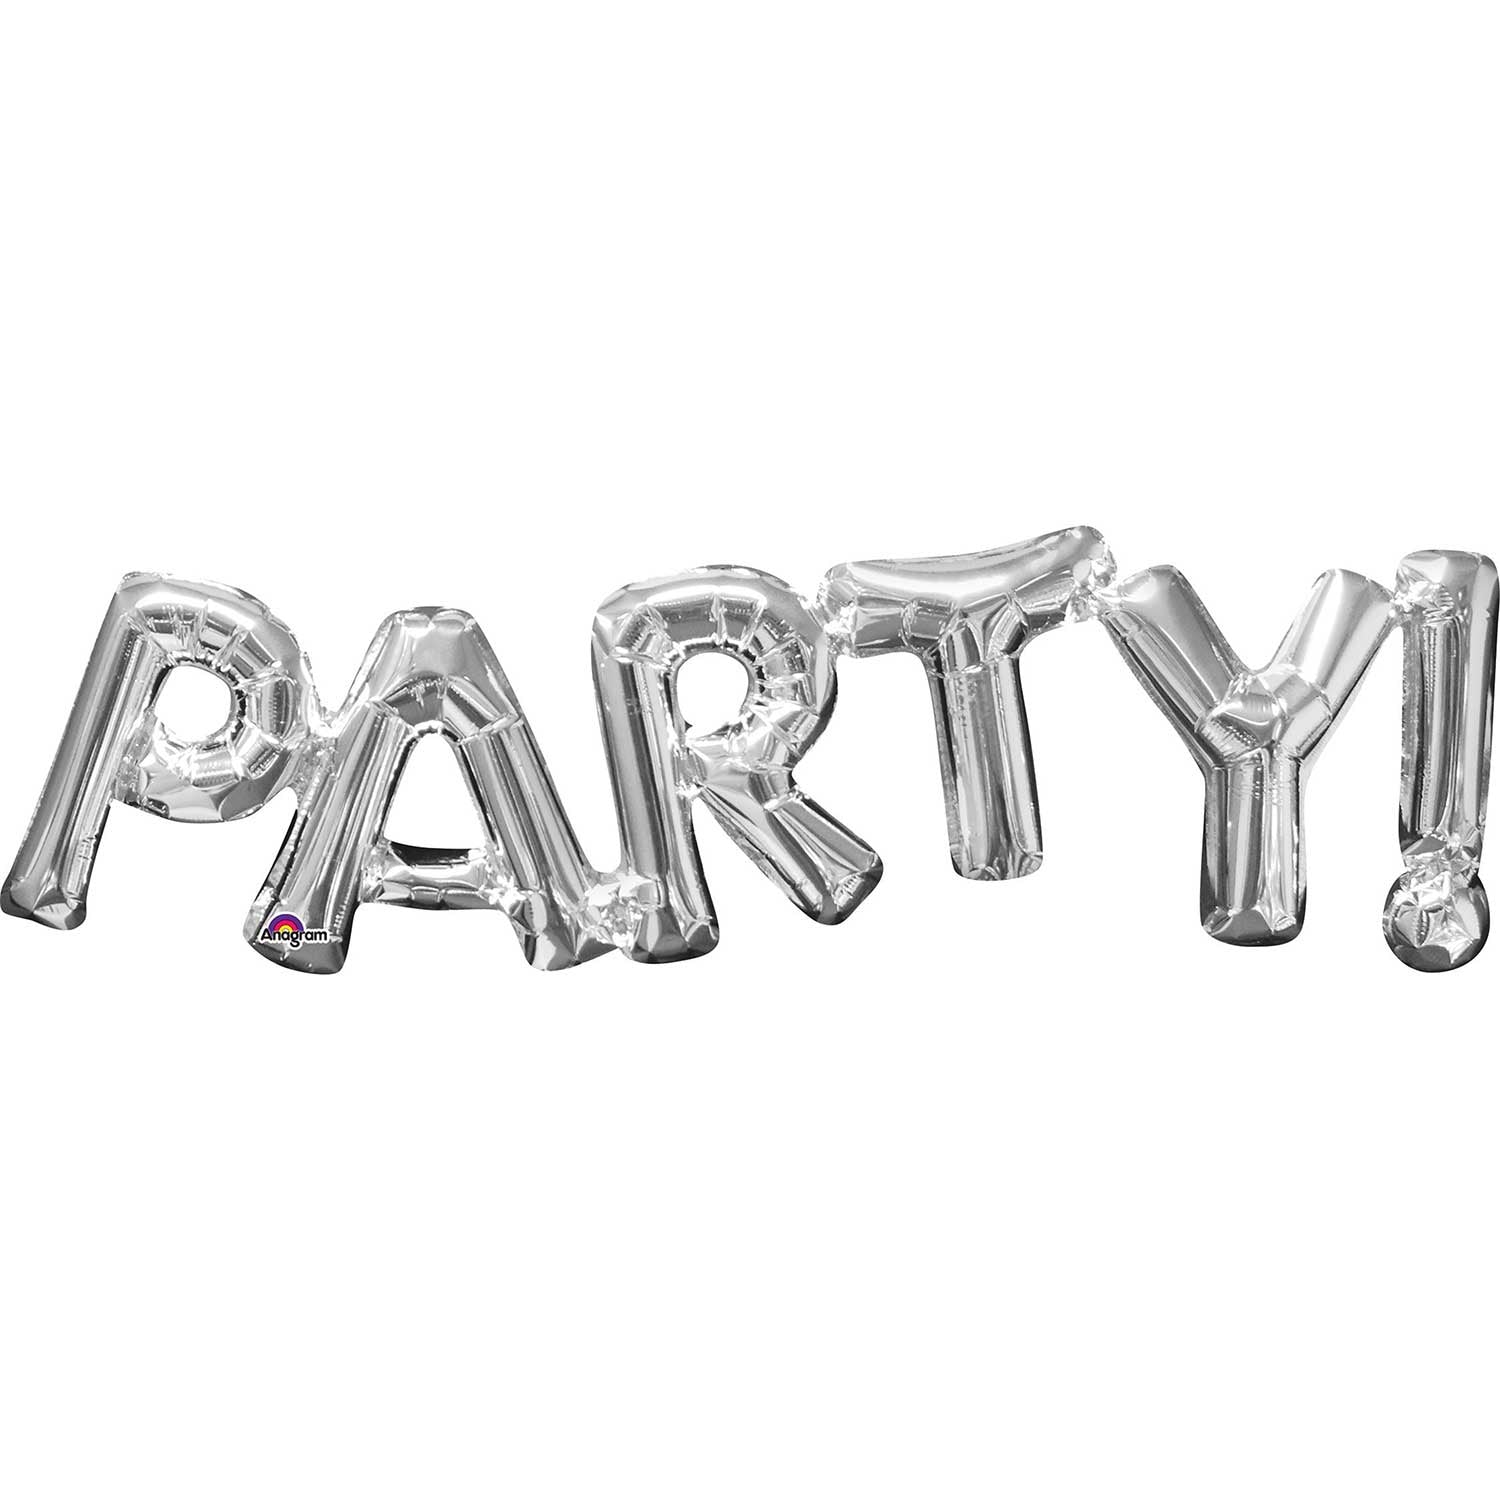 Anagram "Party!" Script Phrase Silver Foil